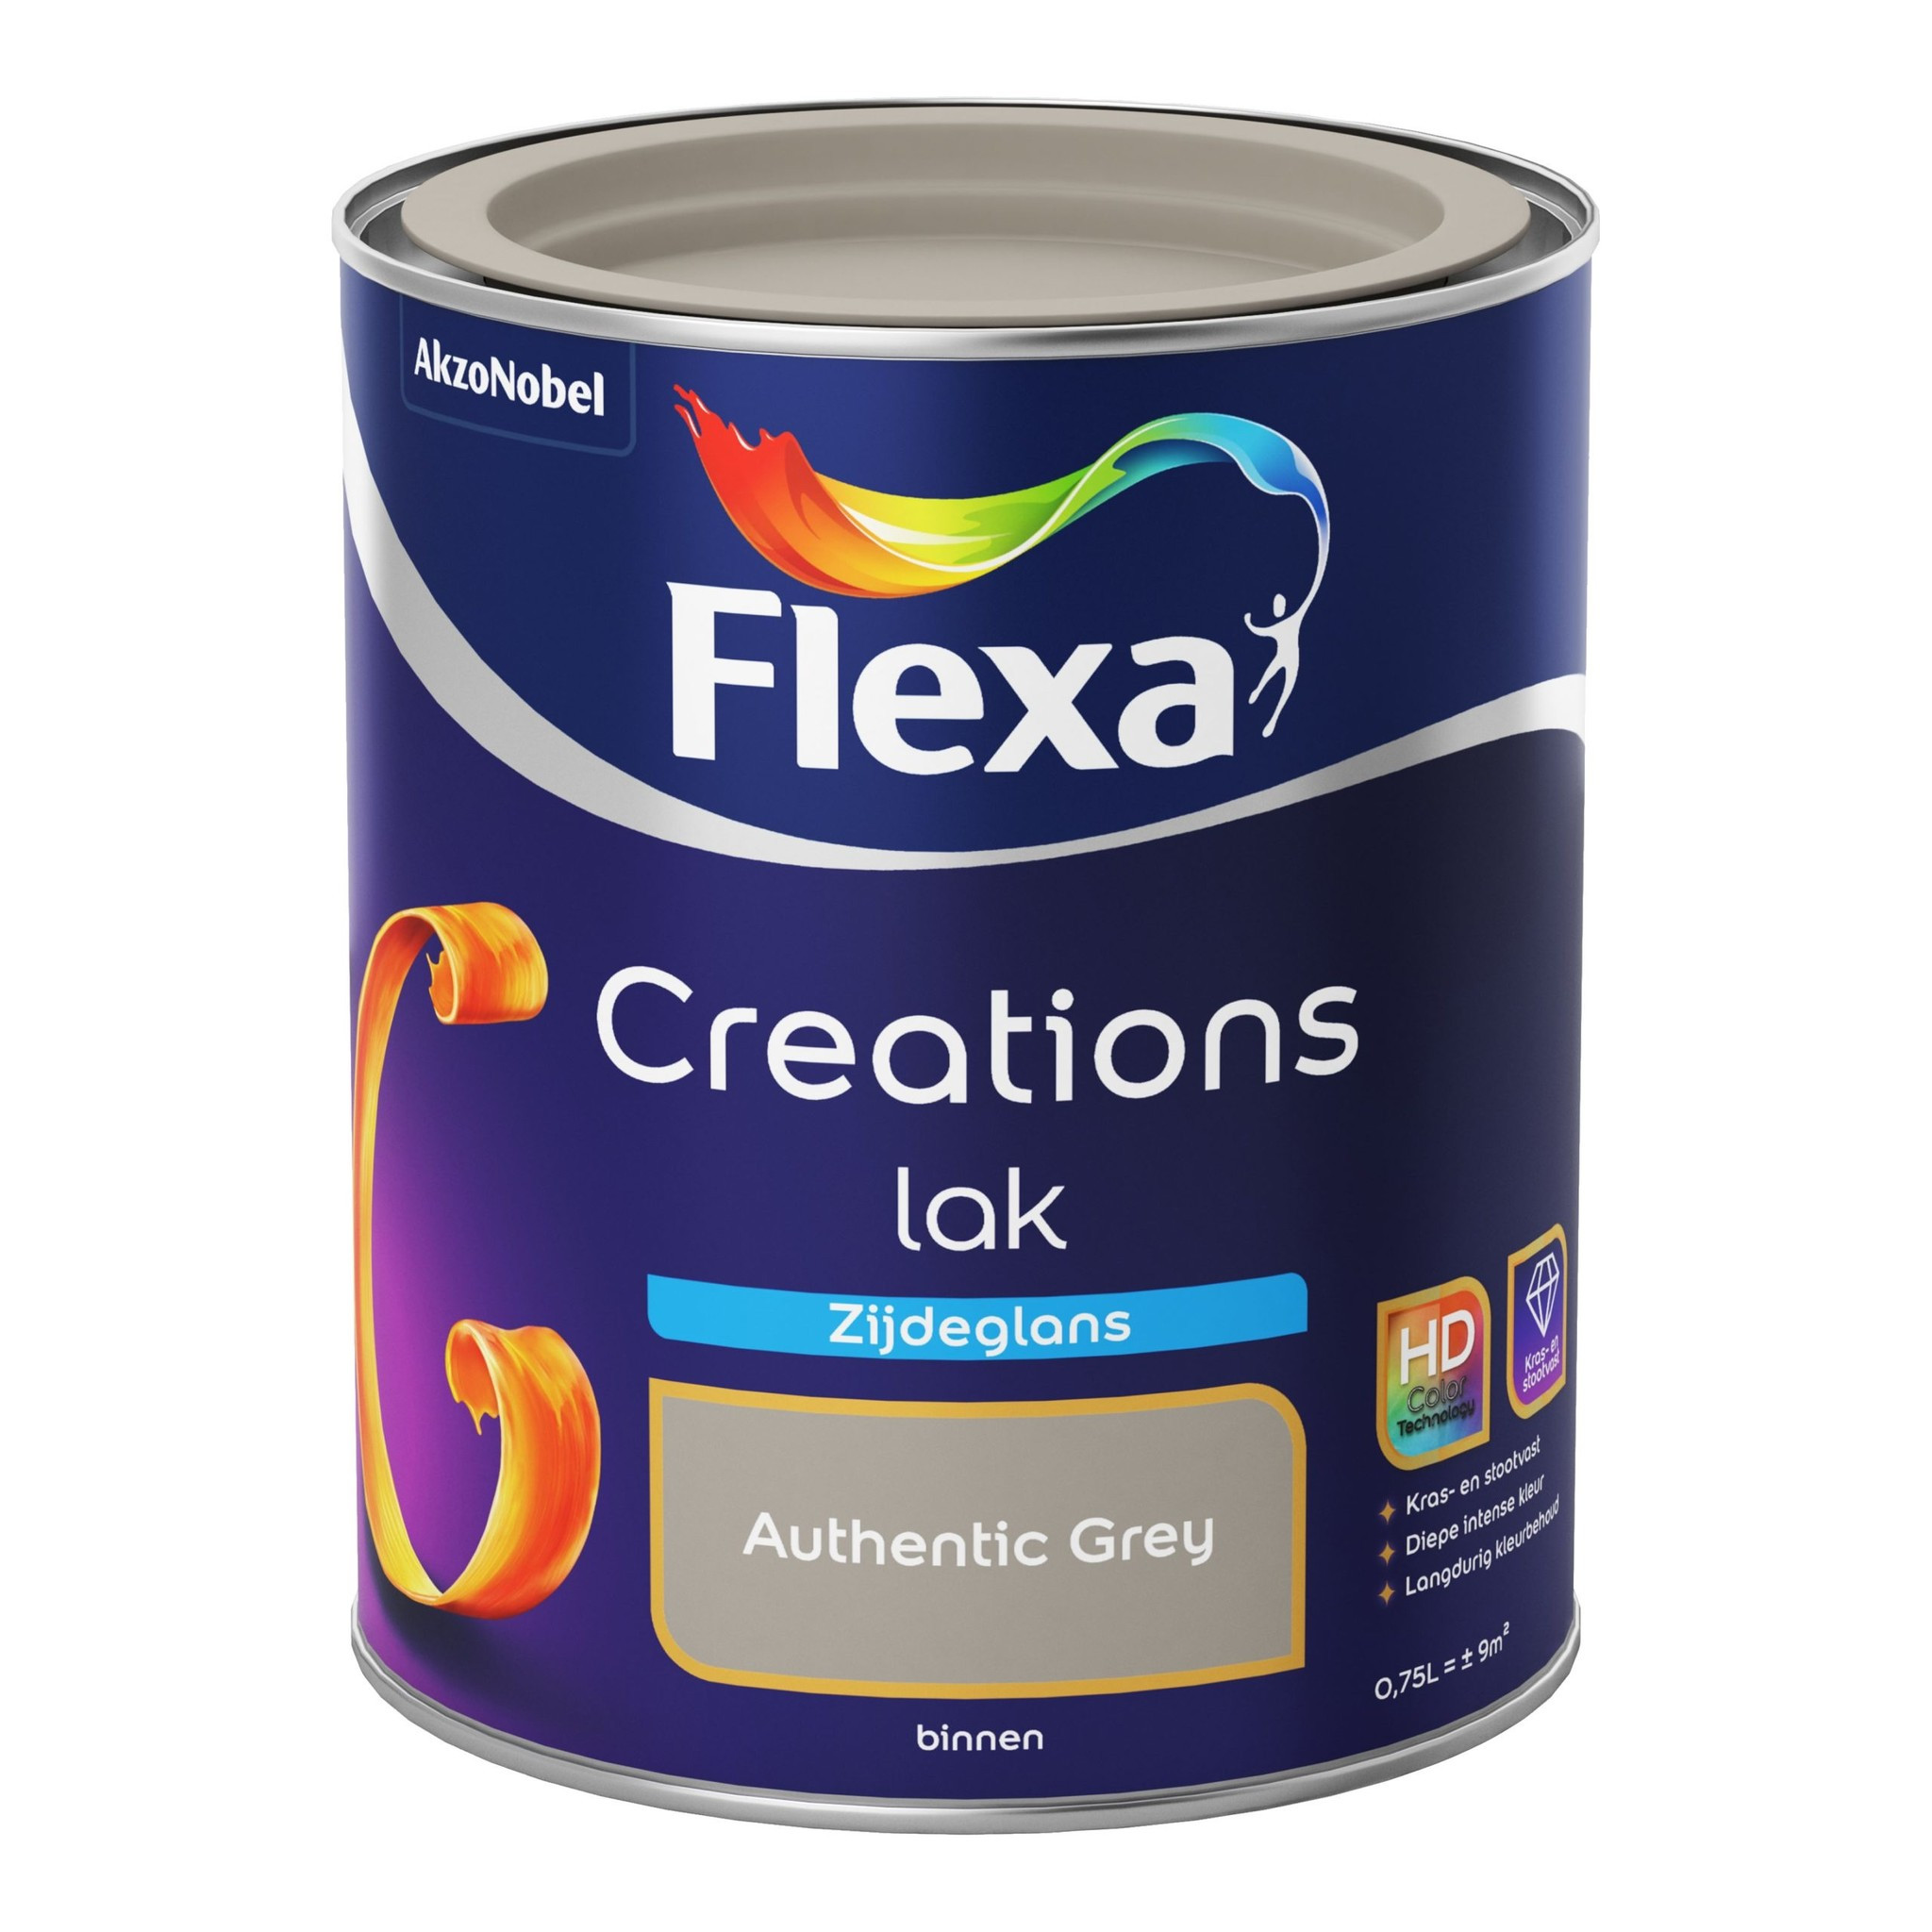 Flexa Creations Lak Zijdeglans - Authentic Grey